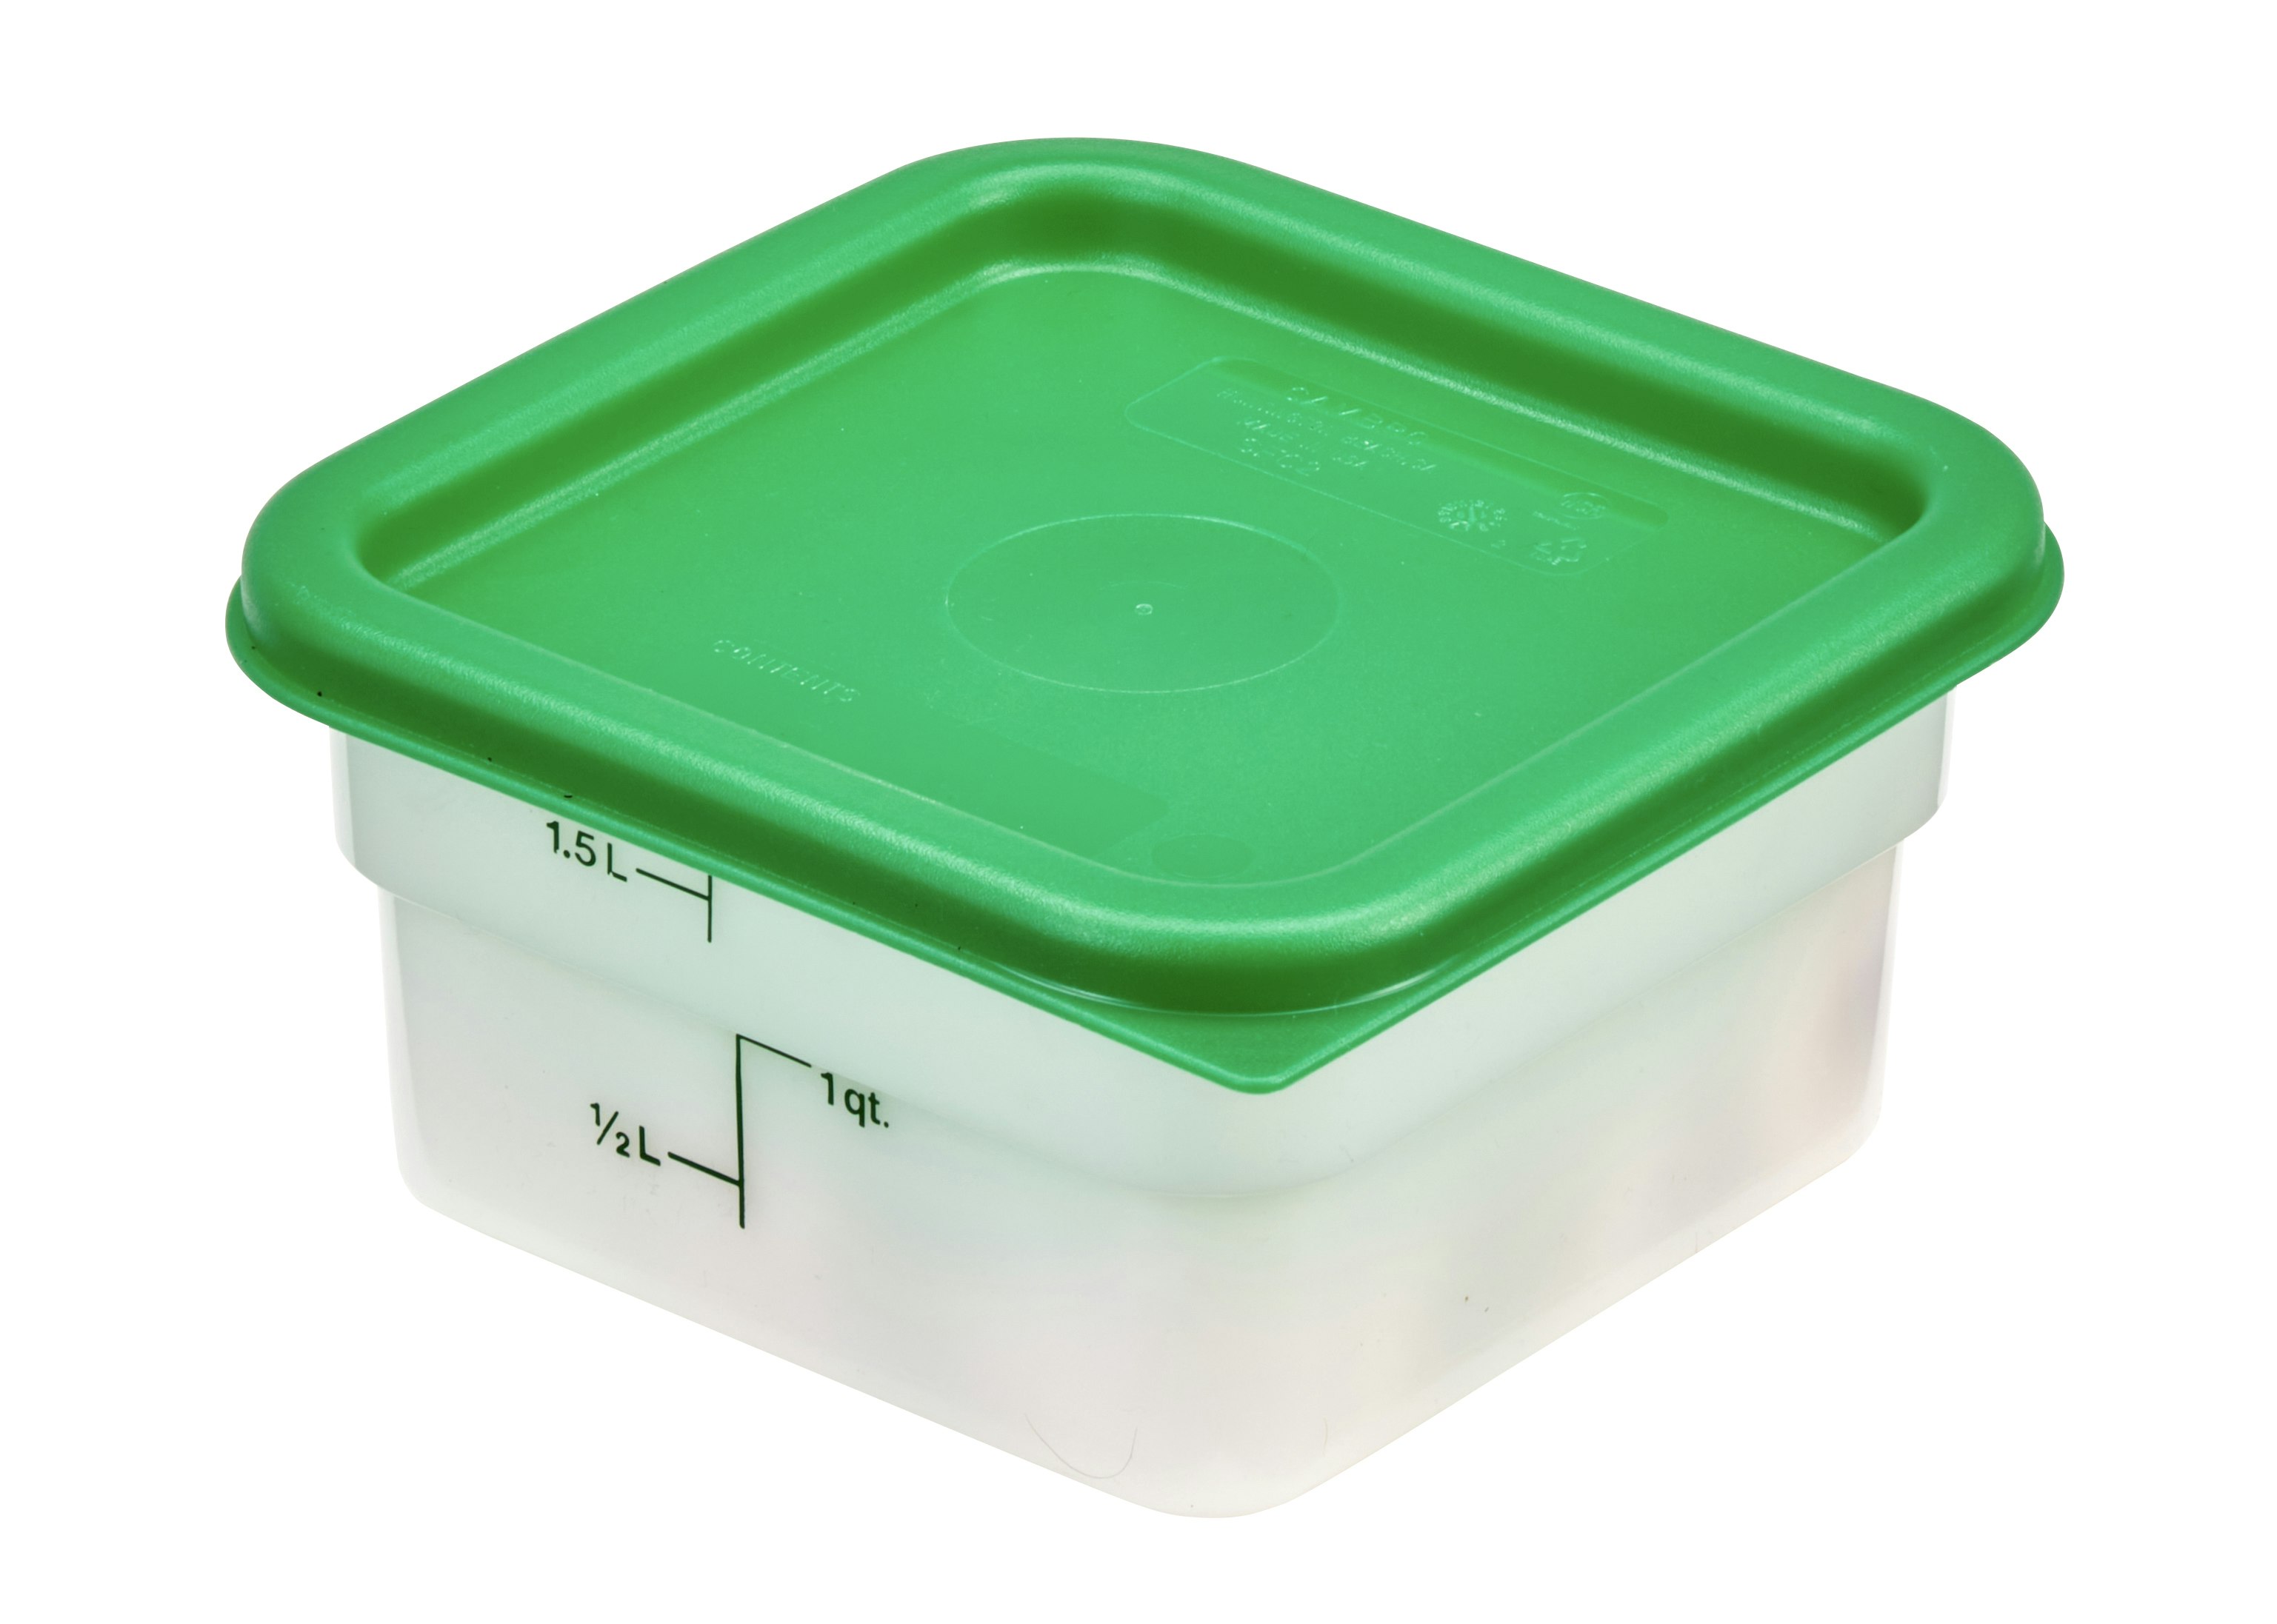 Square Food Storage Container Lids - CamSquares®